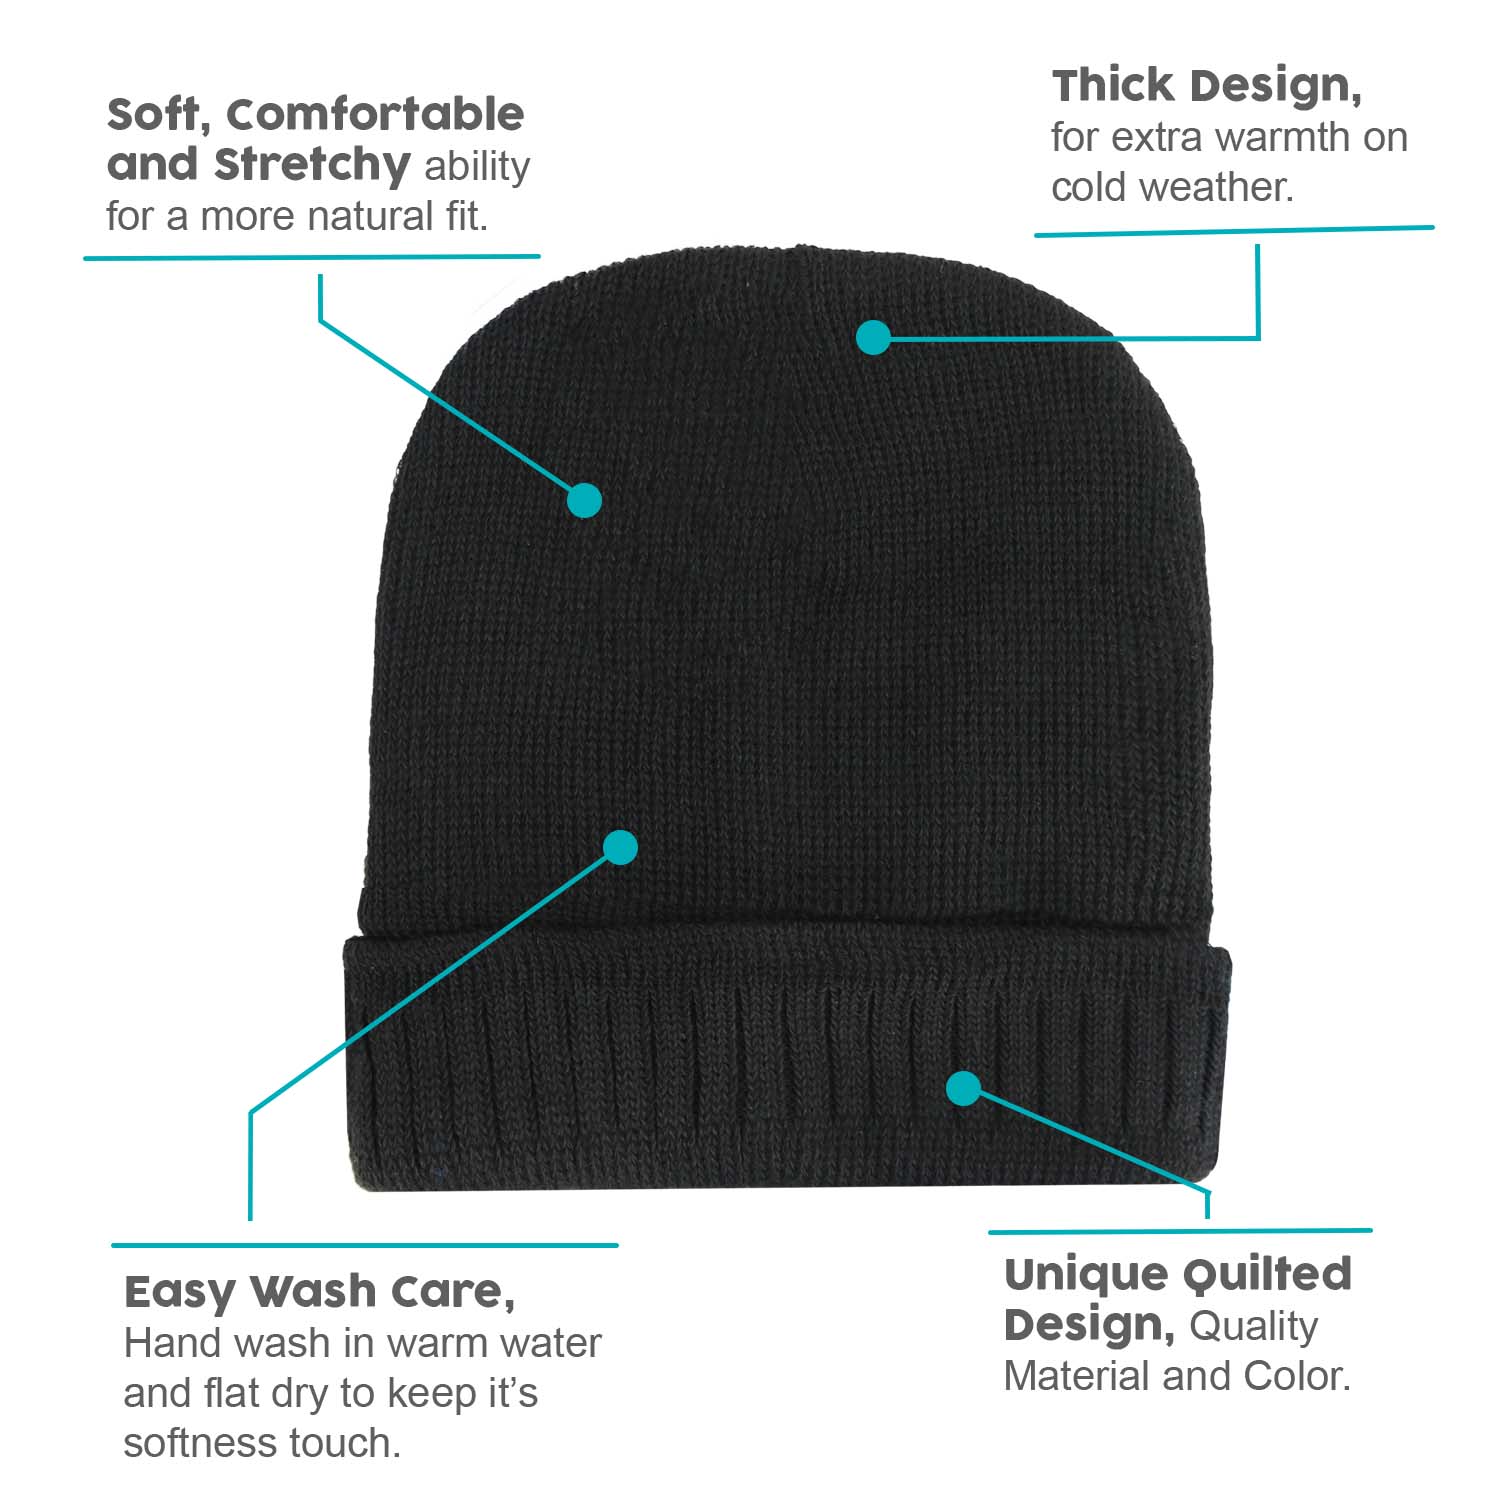 Tarpop 48 Pcs Winter Beanie Gloves Bulk Winter Hat Gloves for Homeless Winter Warm Glove Stretch Knit Beanie for Women Men